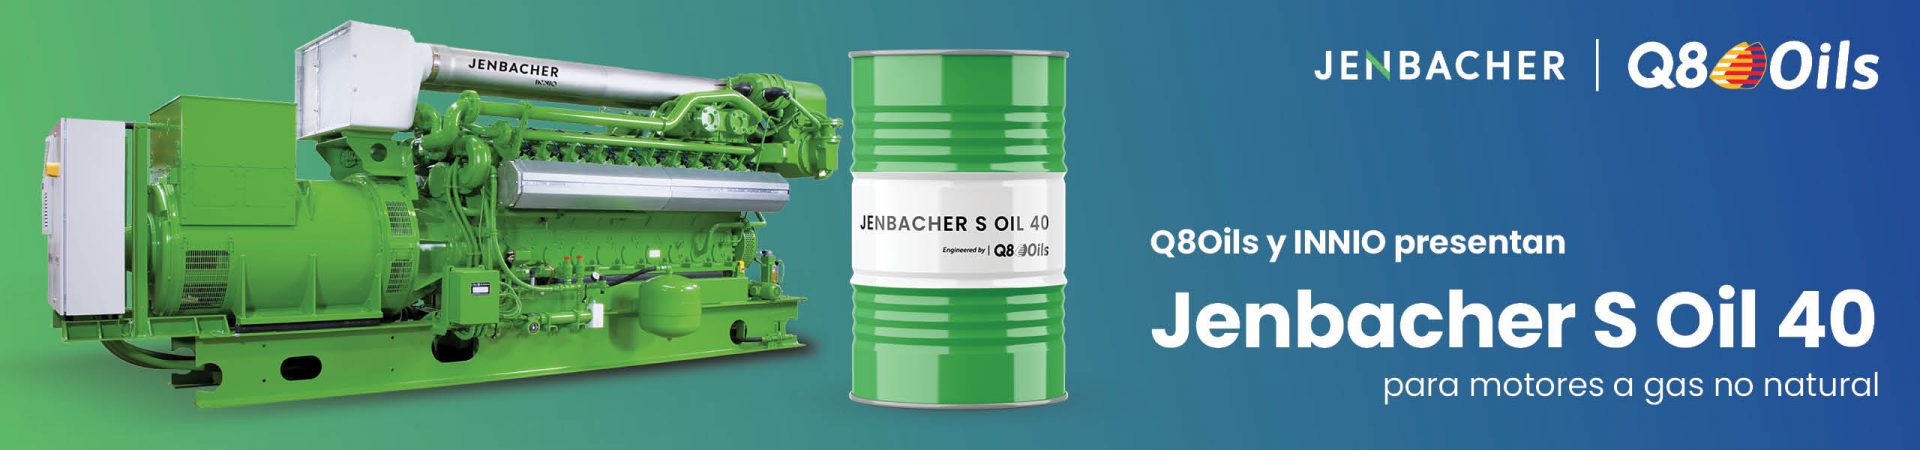 Jenbacher S Oil 40 - ES